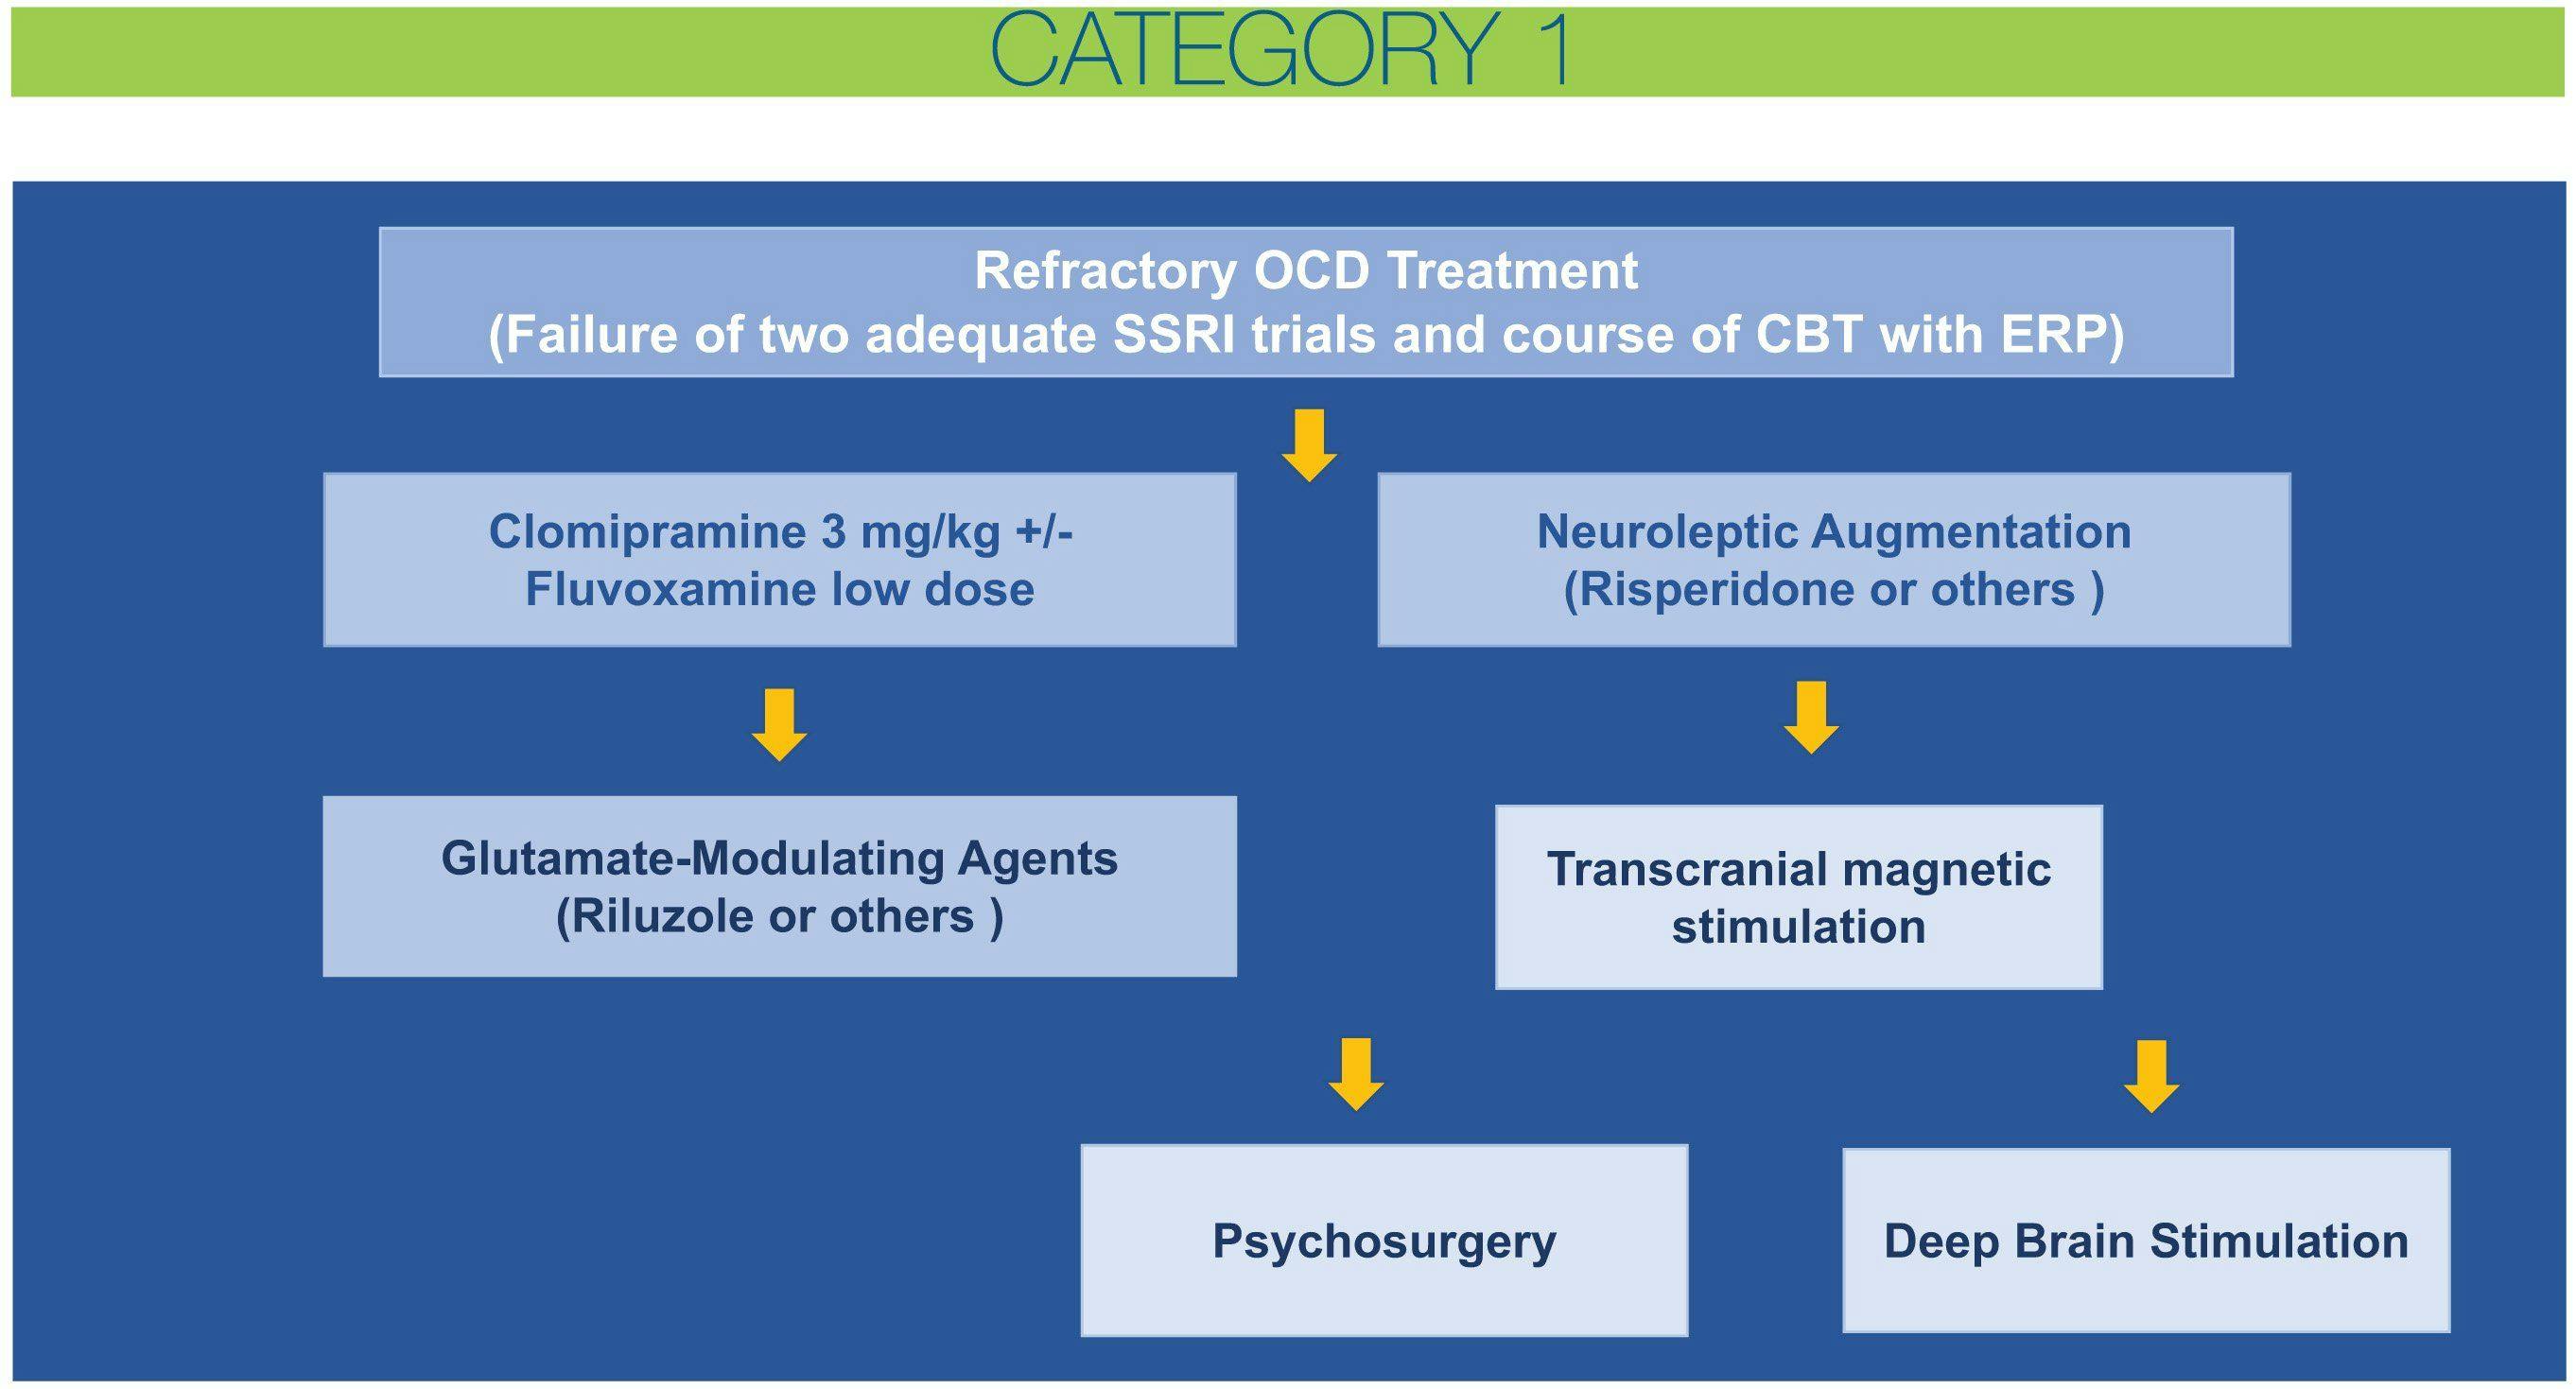 Refractory OCD Treatment